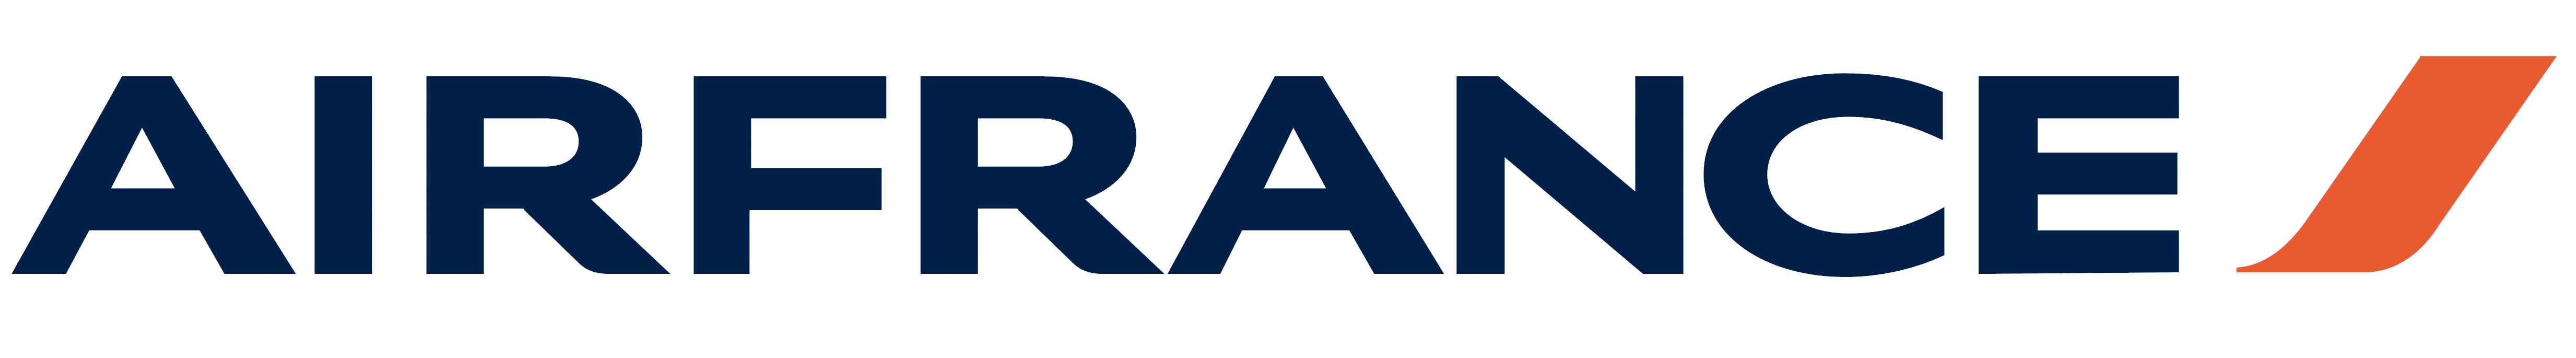 Air France logo, logotype